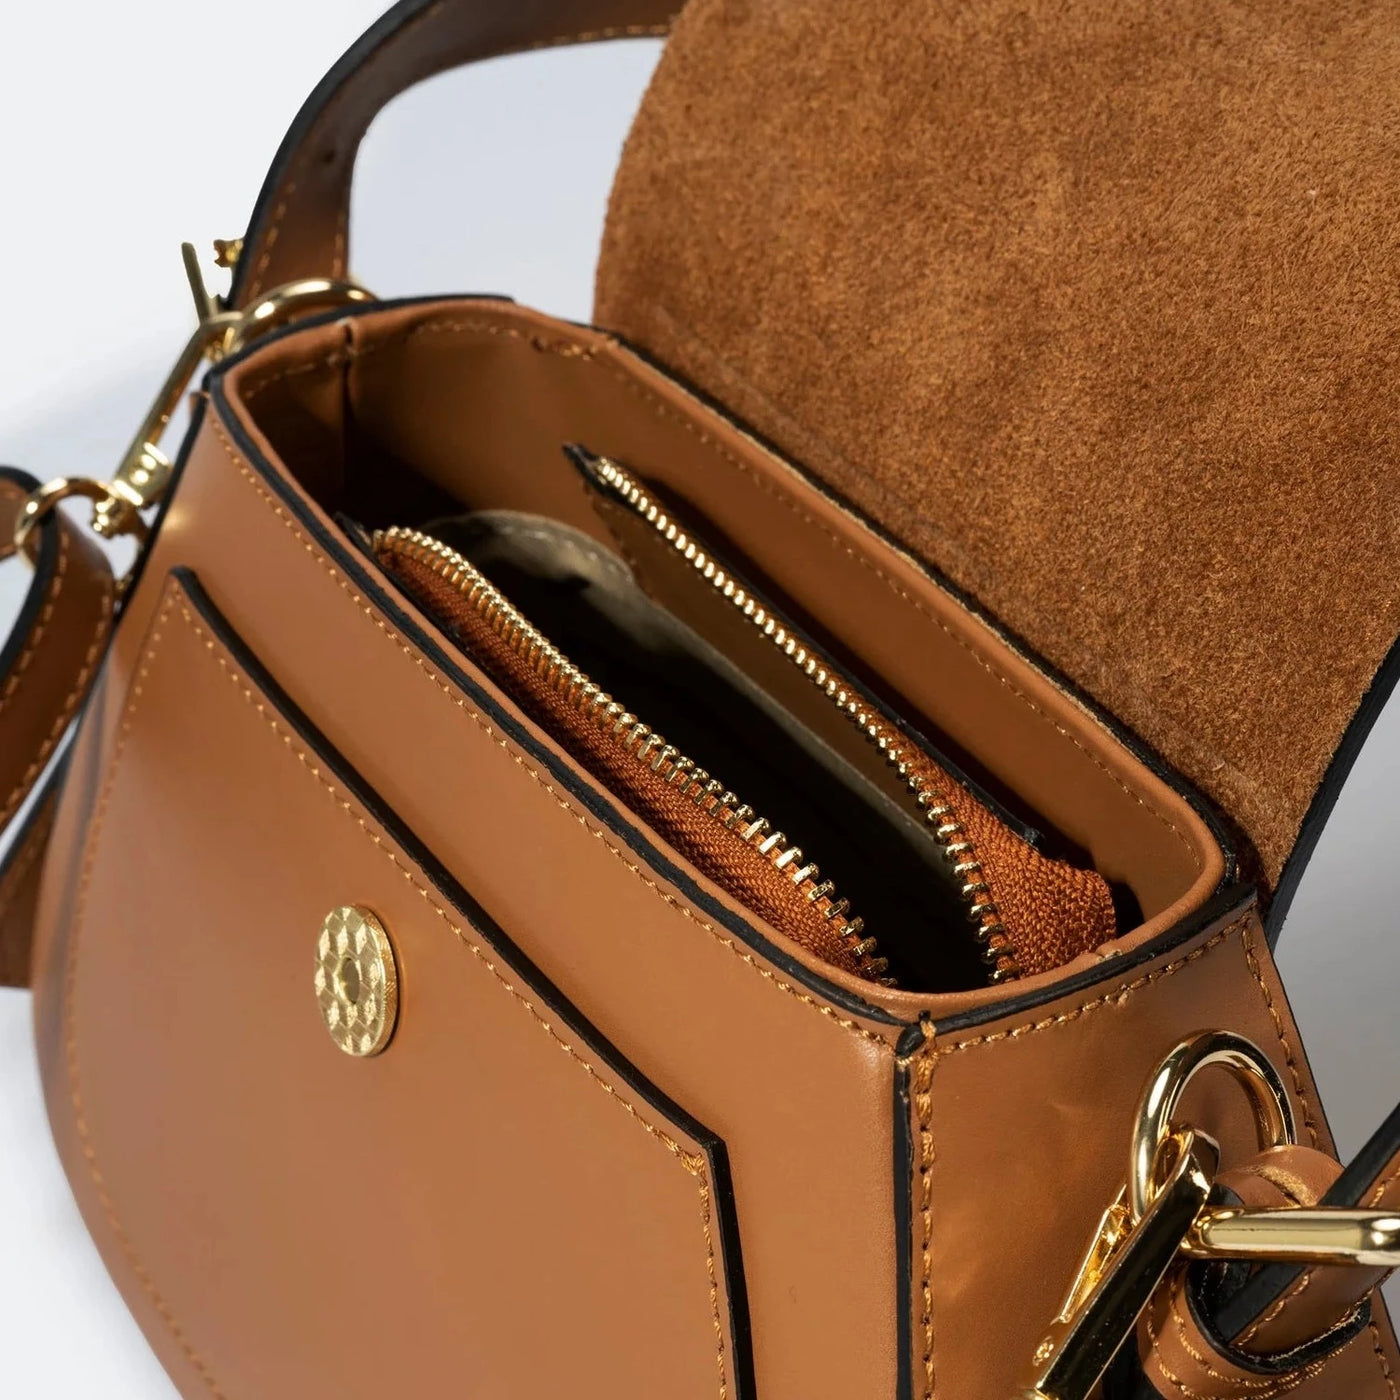 Leather bag with 2 shoulder straps "Milan", Brown